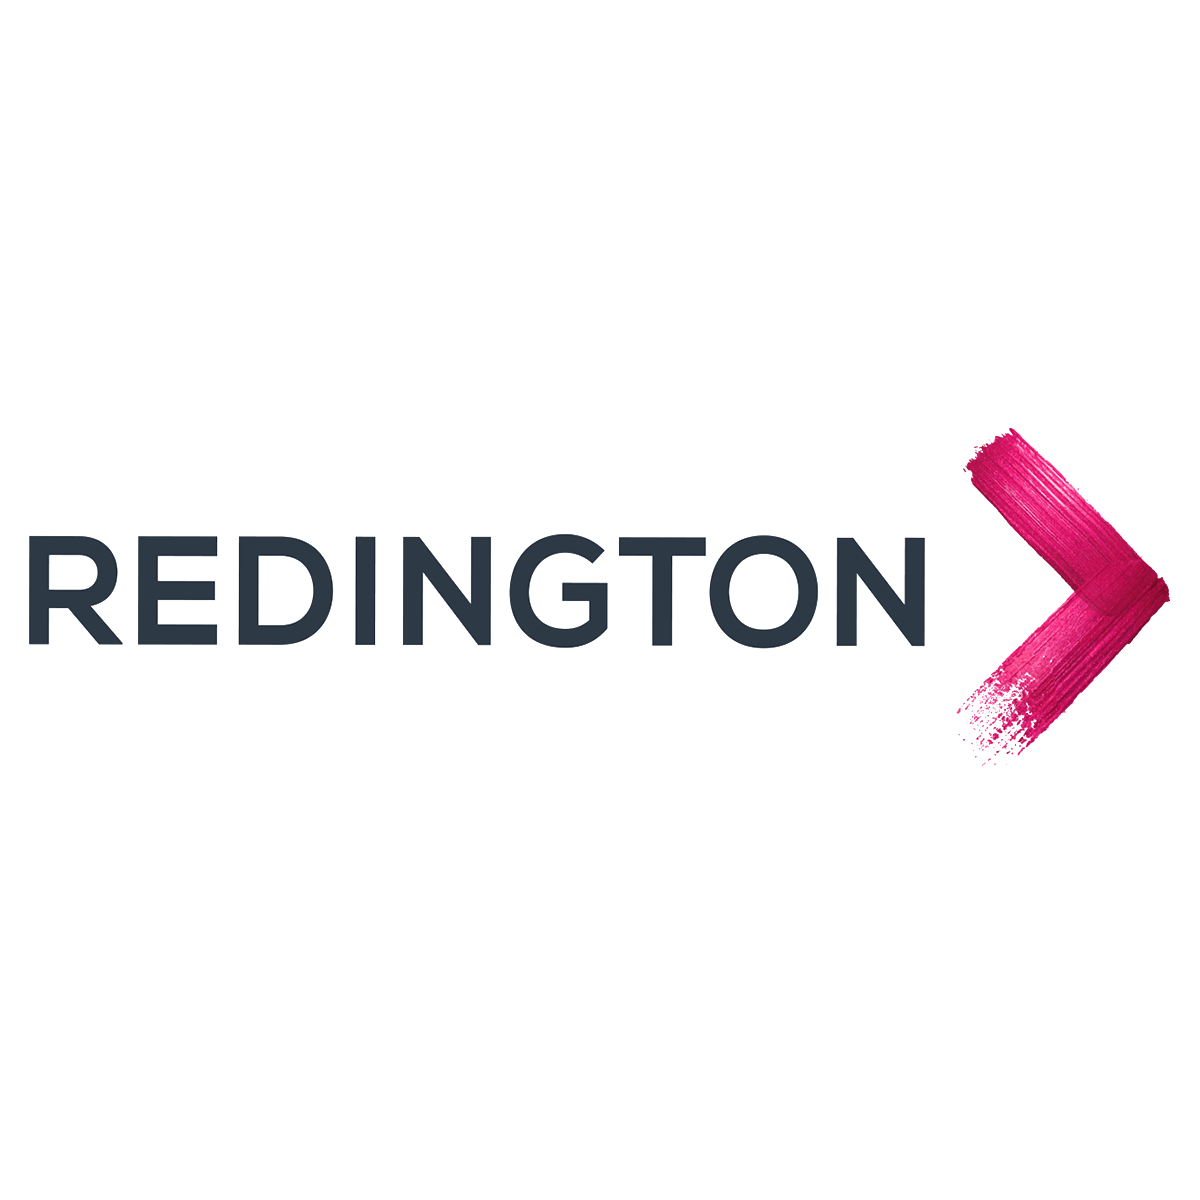 redington logo